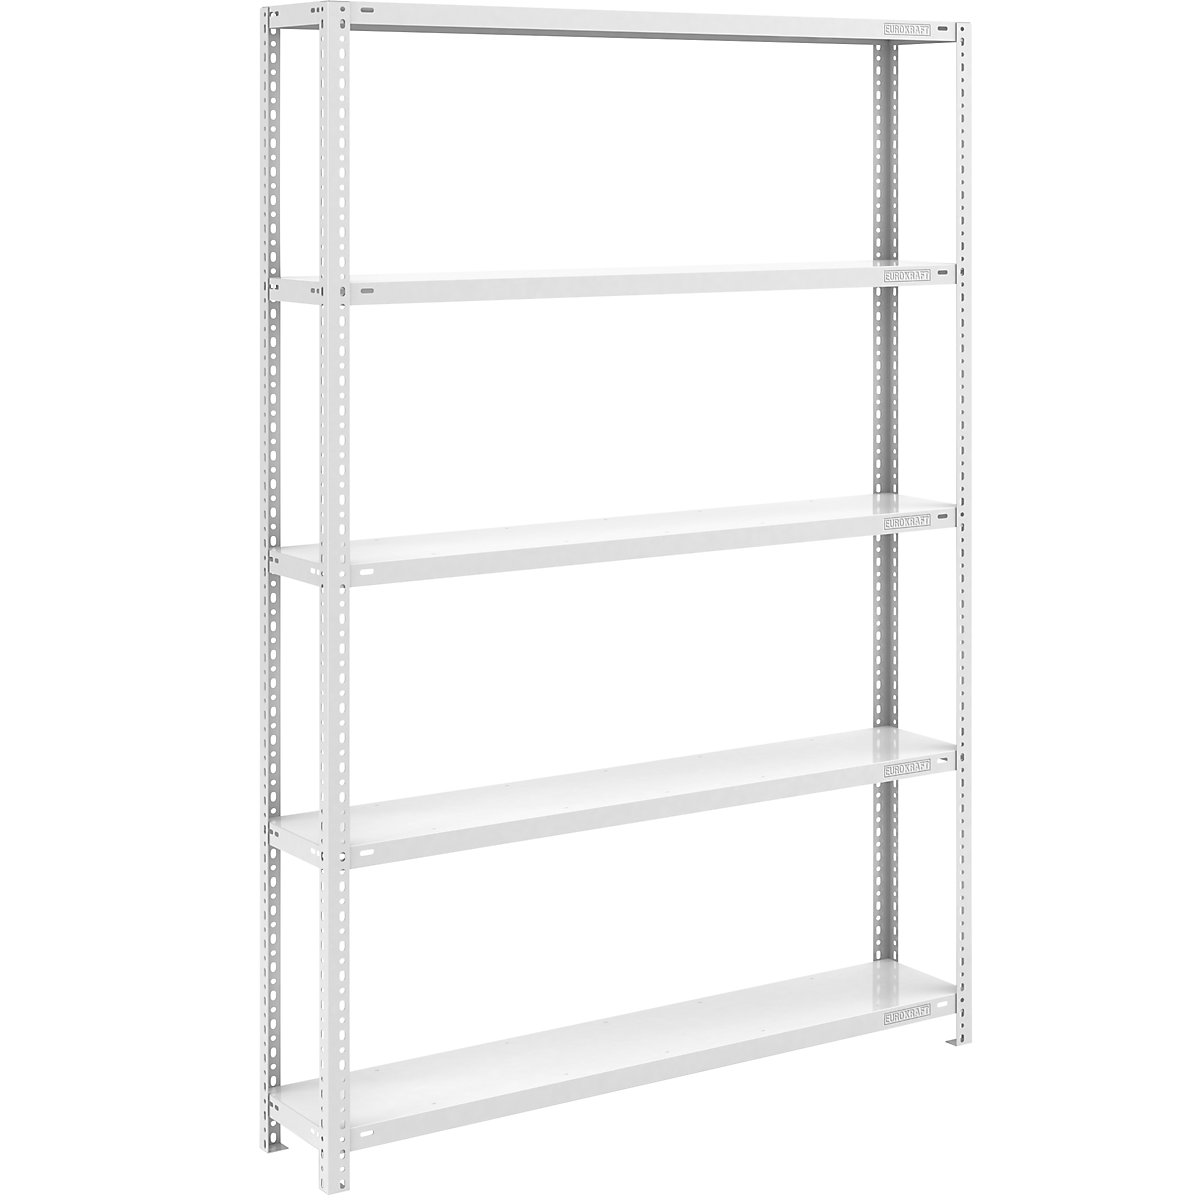 Bolt-together shelf unit, light duty, plastic coated – eurokraft pro, shelf unit height 2000 mm, shelf width 1300 mm, depth 300 mm, standard shelf unit-9